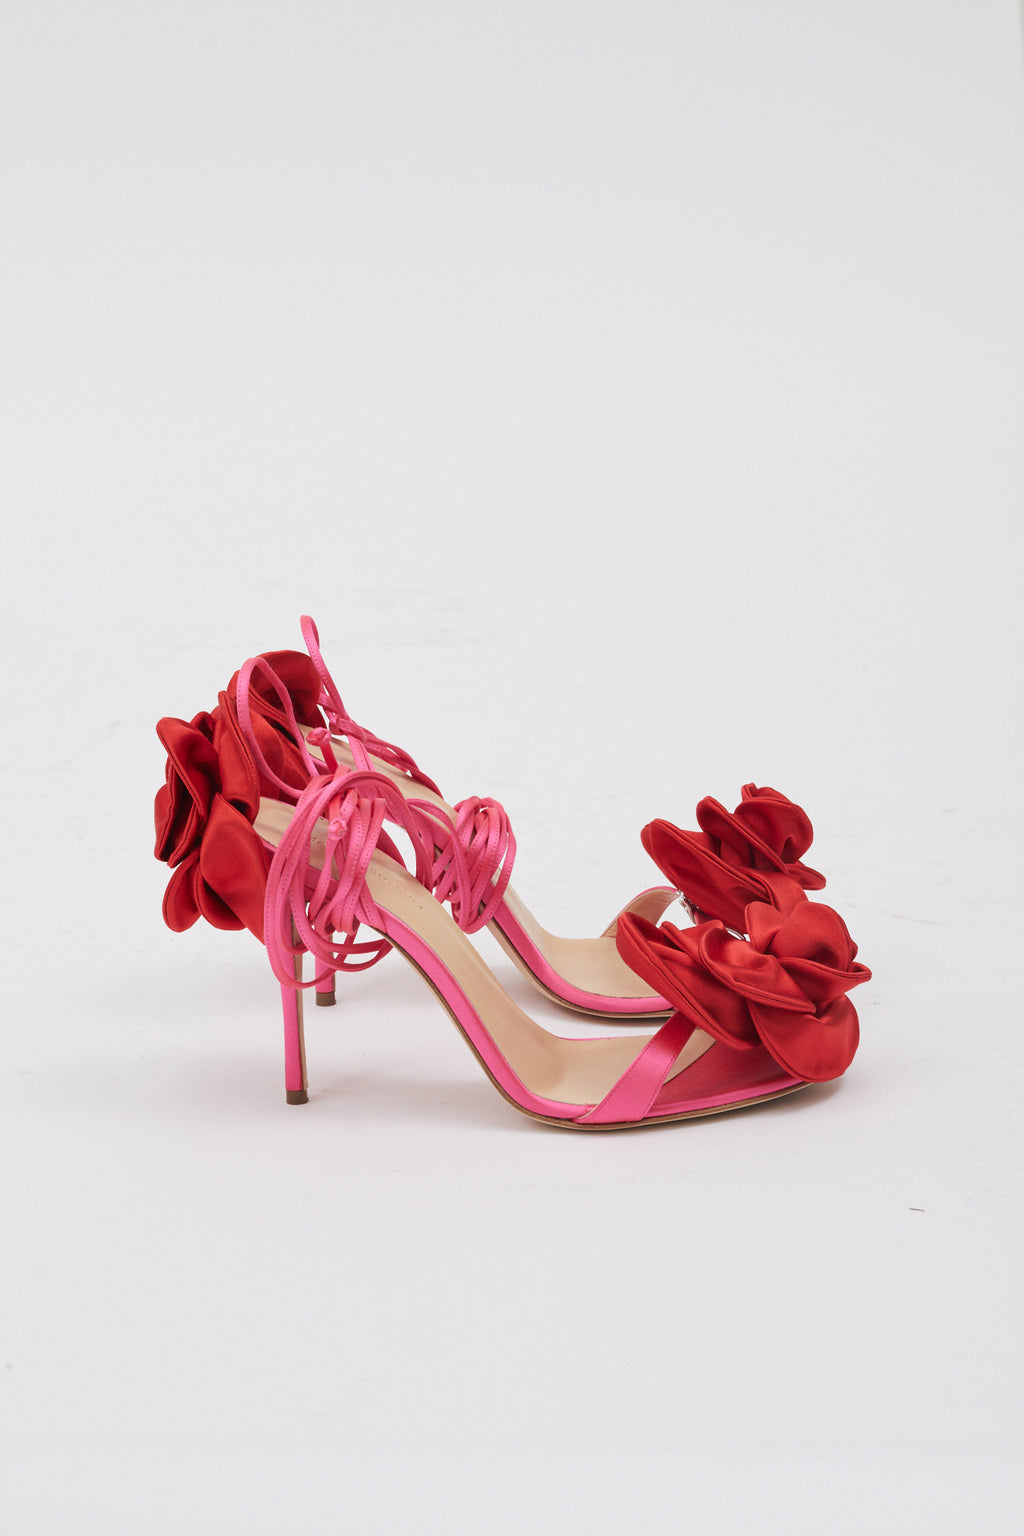 Double Flower Red Fuchsia Satin Heel Sandals